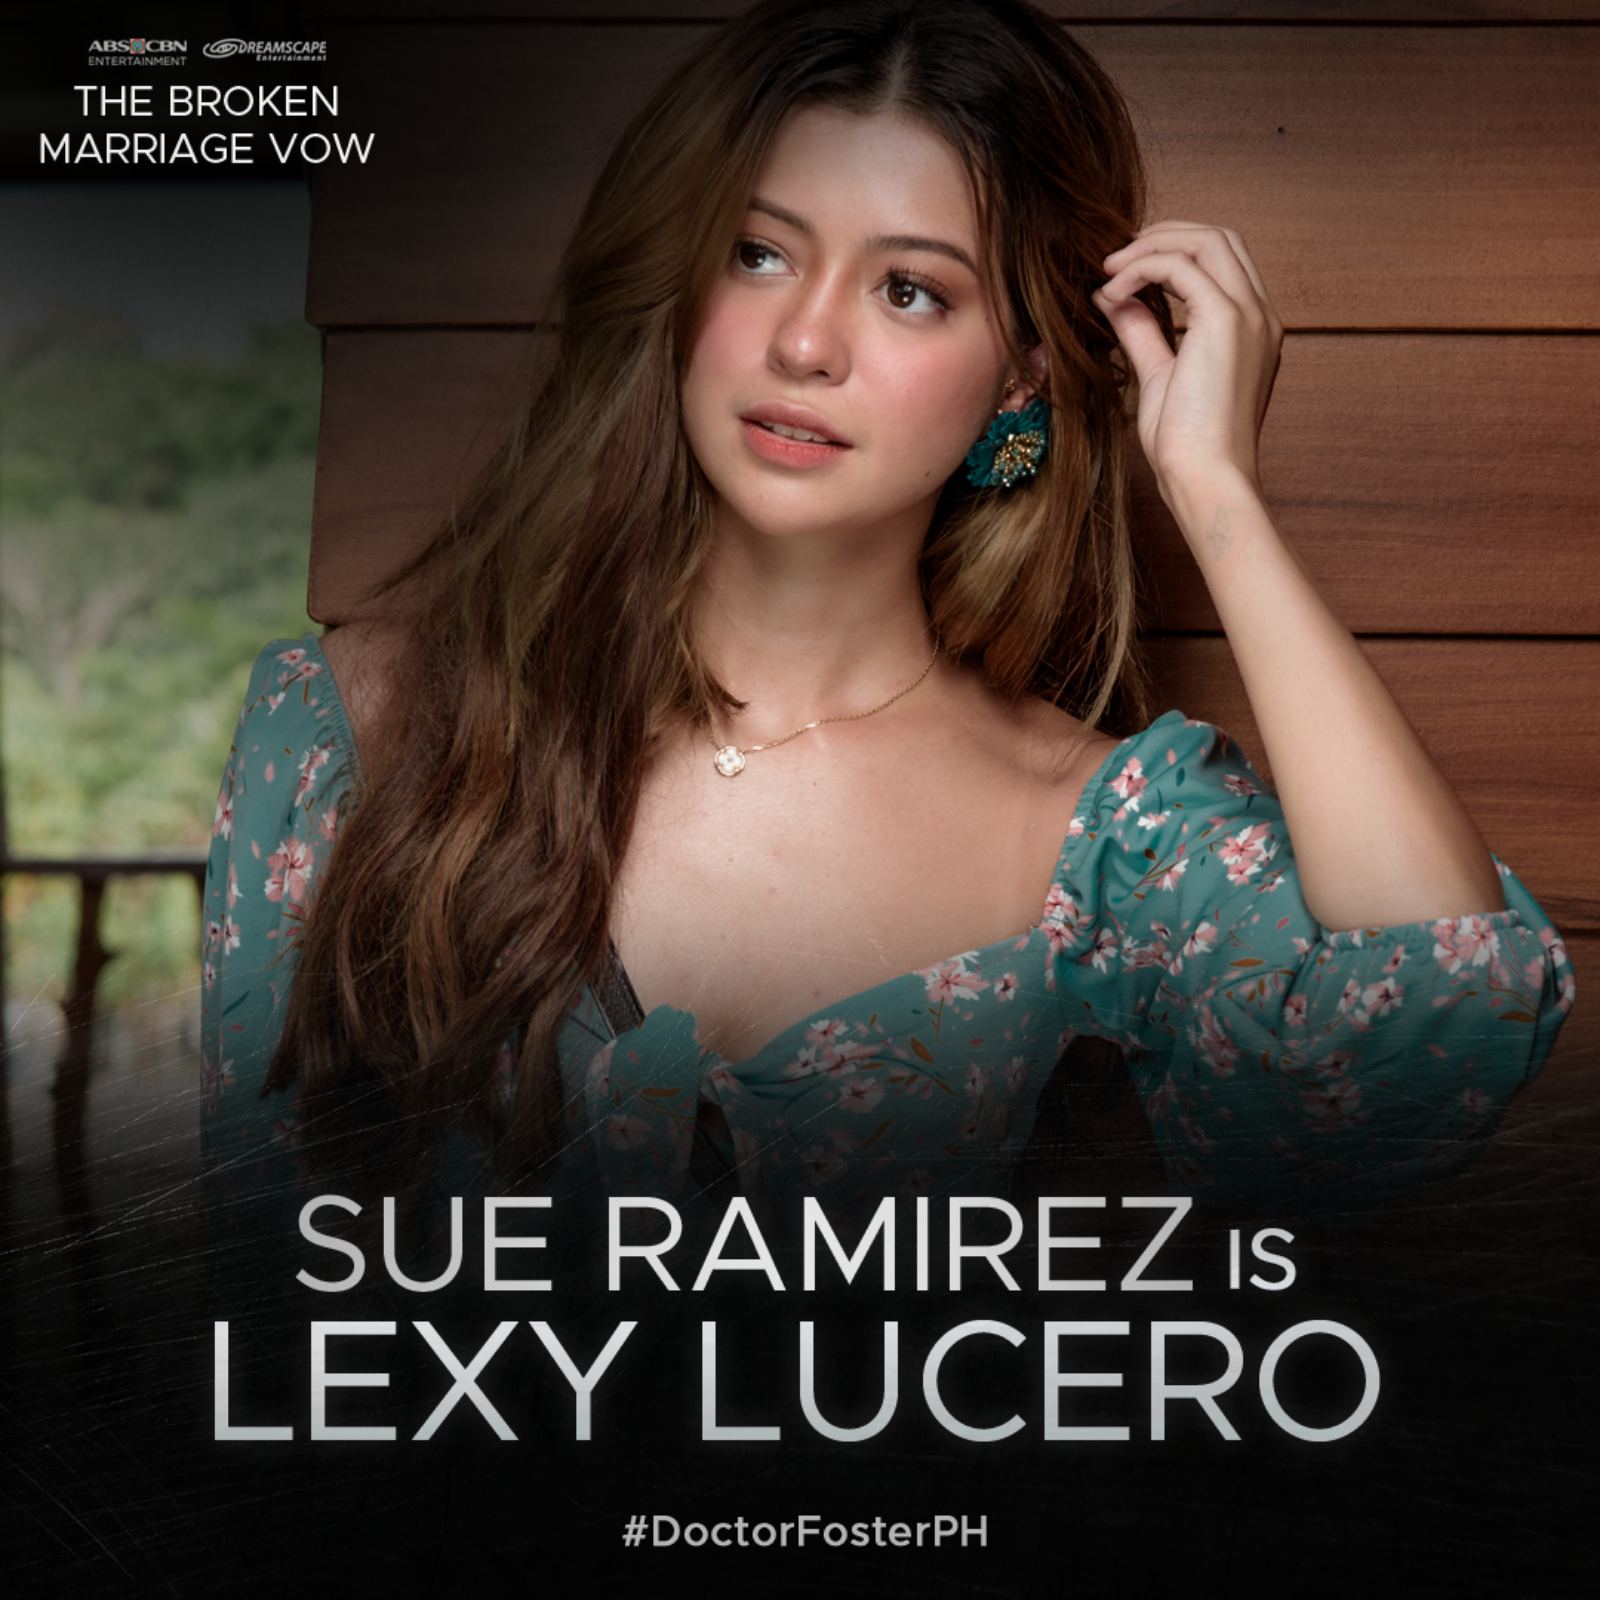 Sue Ramirez is Lexy Lucero in The Broken Marriage Vow